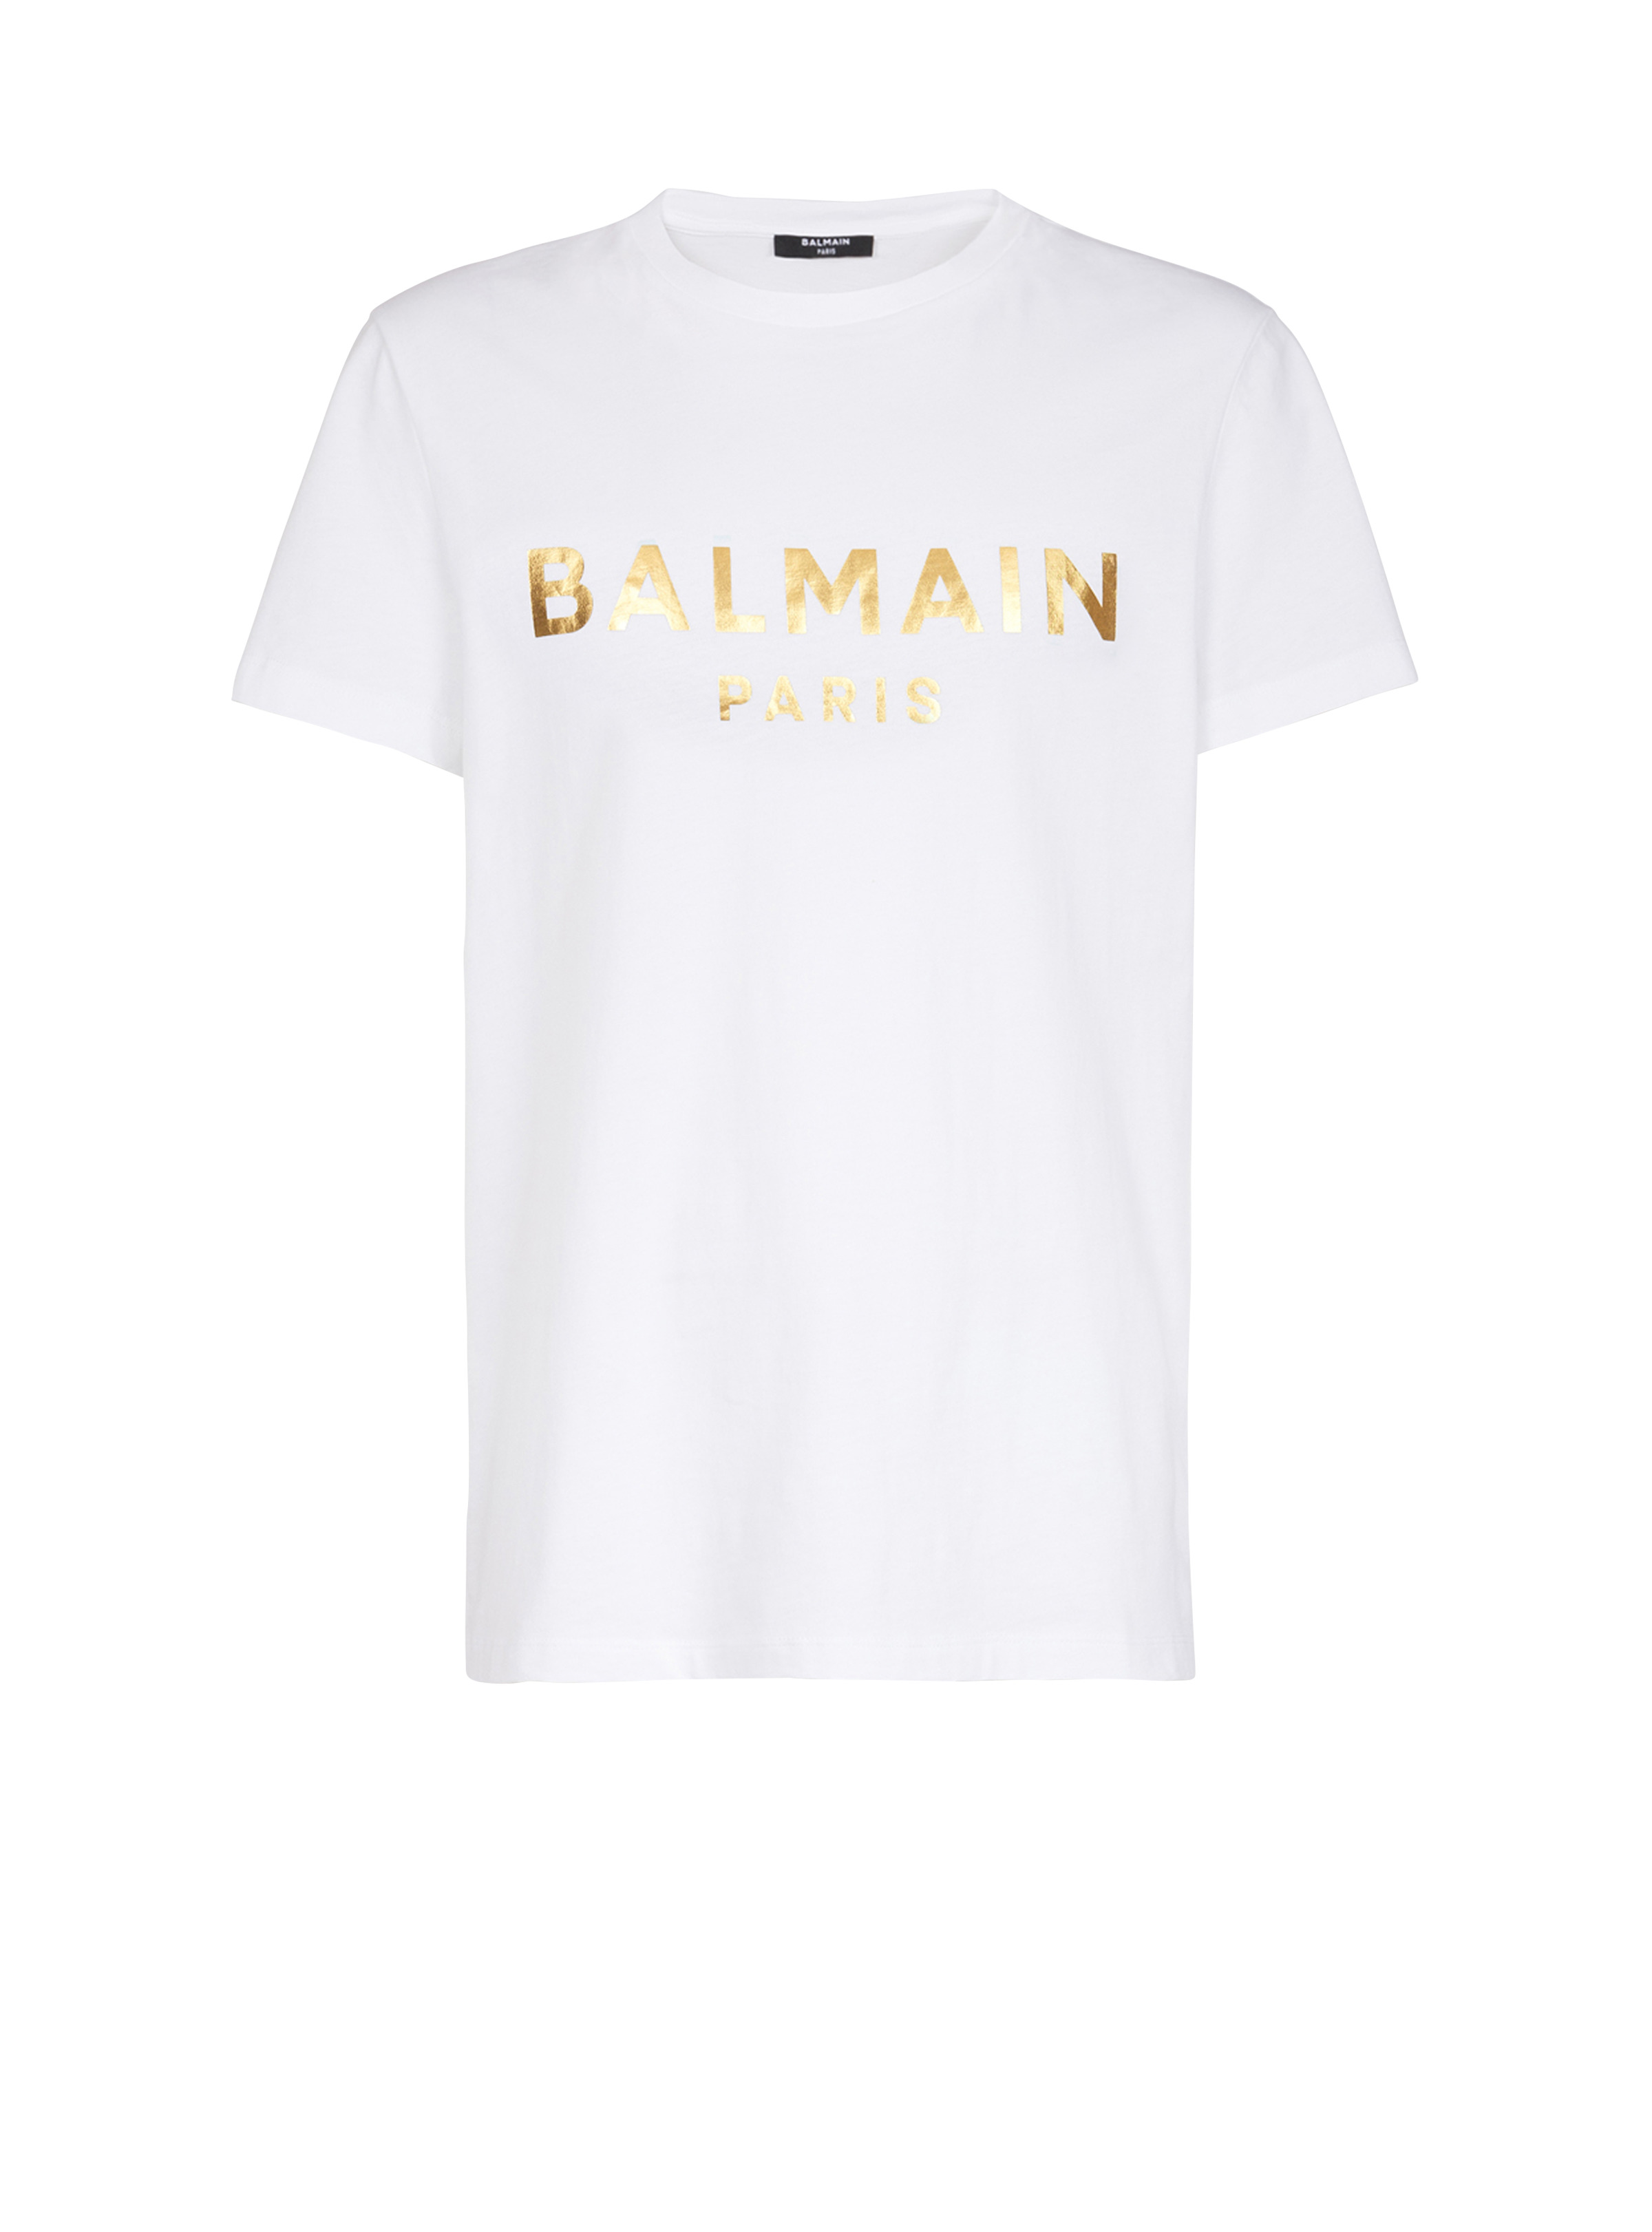 Balmain Eco-designed cotton T-shirt with Balmain Paris logo print |  REVERSIBLE